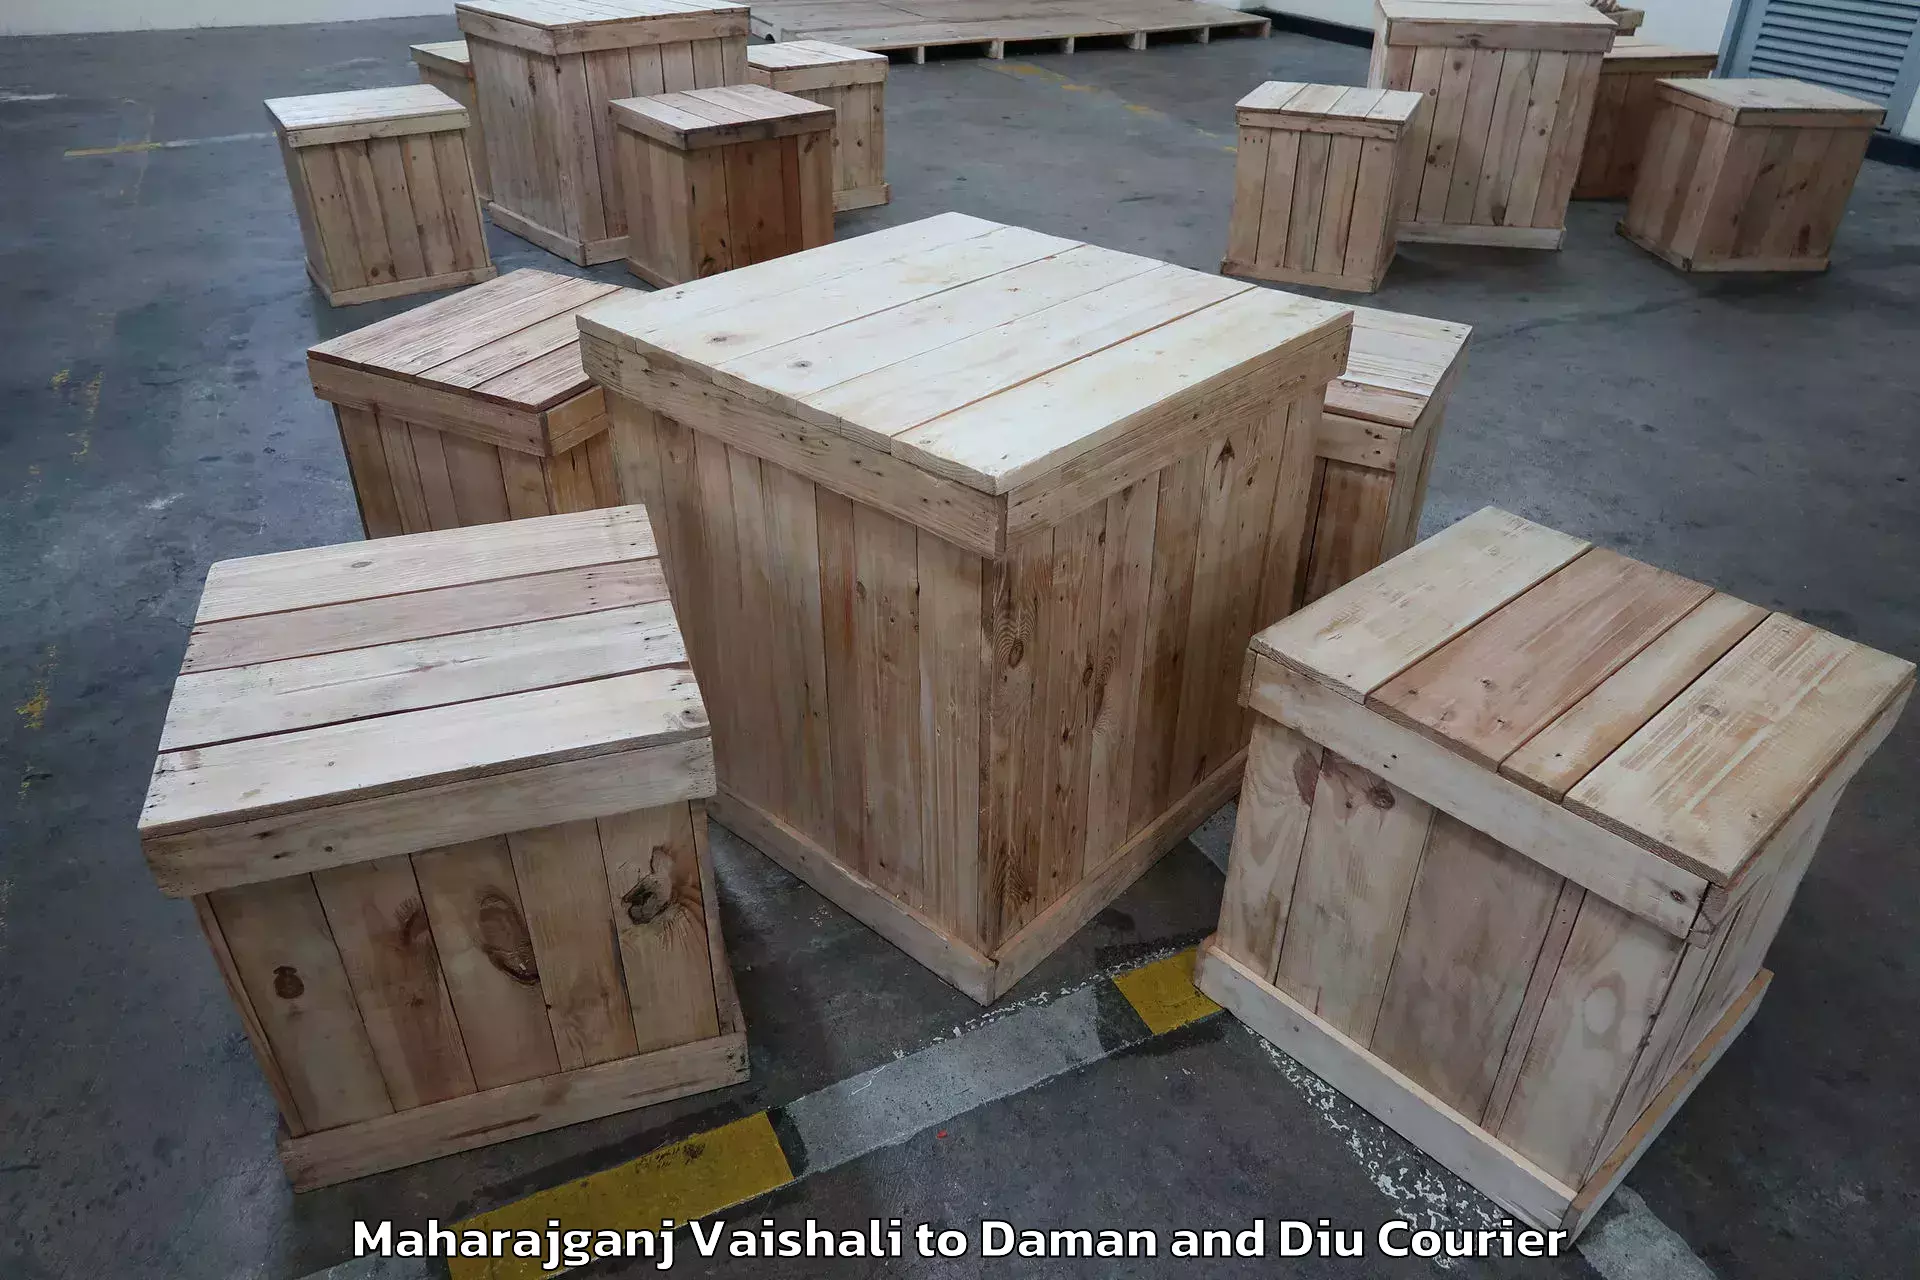 Furniture relocation experts Maharajganj Vaishali to Diu